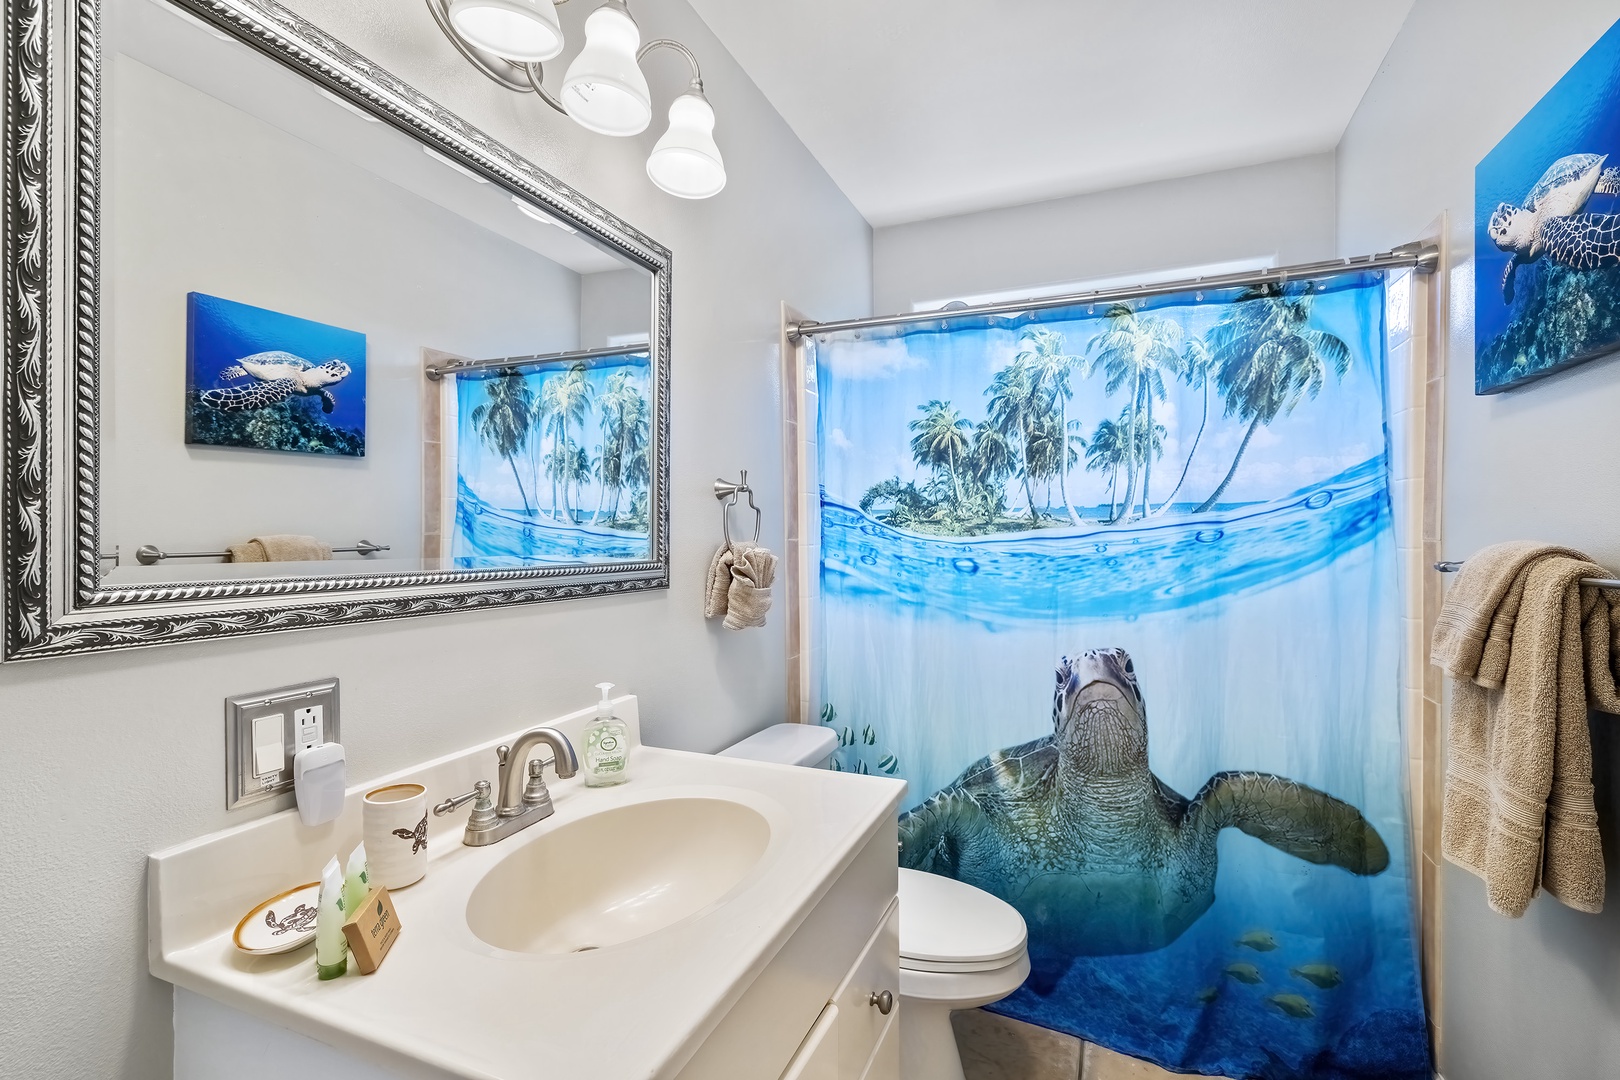 Kailua Kona Vacation Rentals, Honu O Kai (Turtle of the Sea) - Bathroom